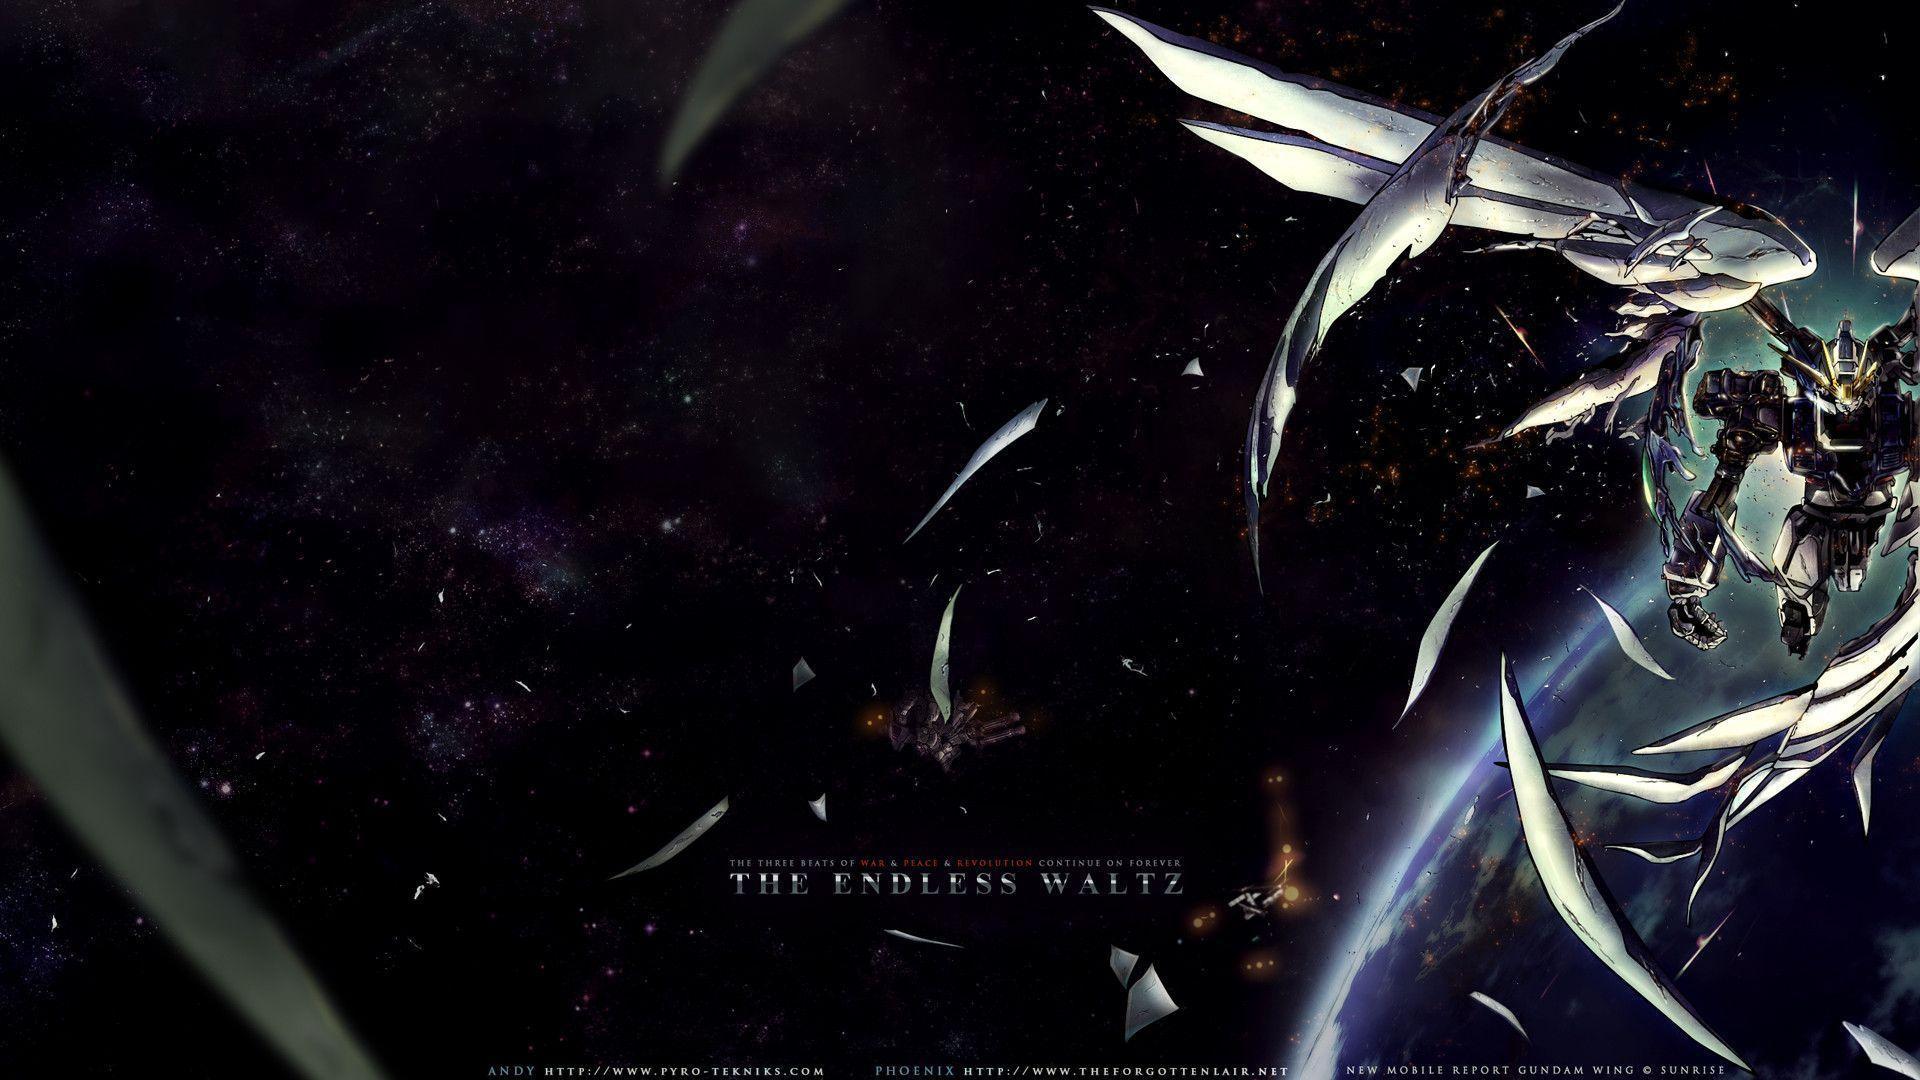 Gundam Wallpaper 1080p